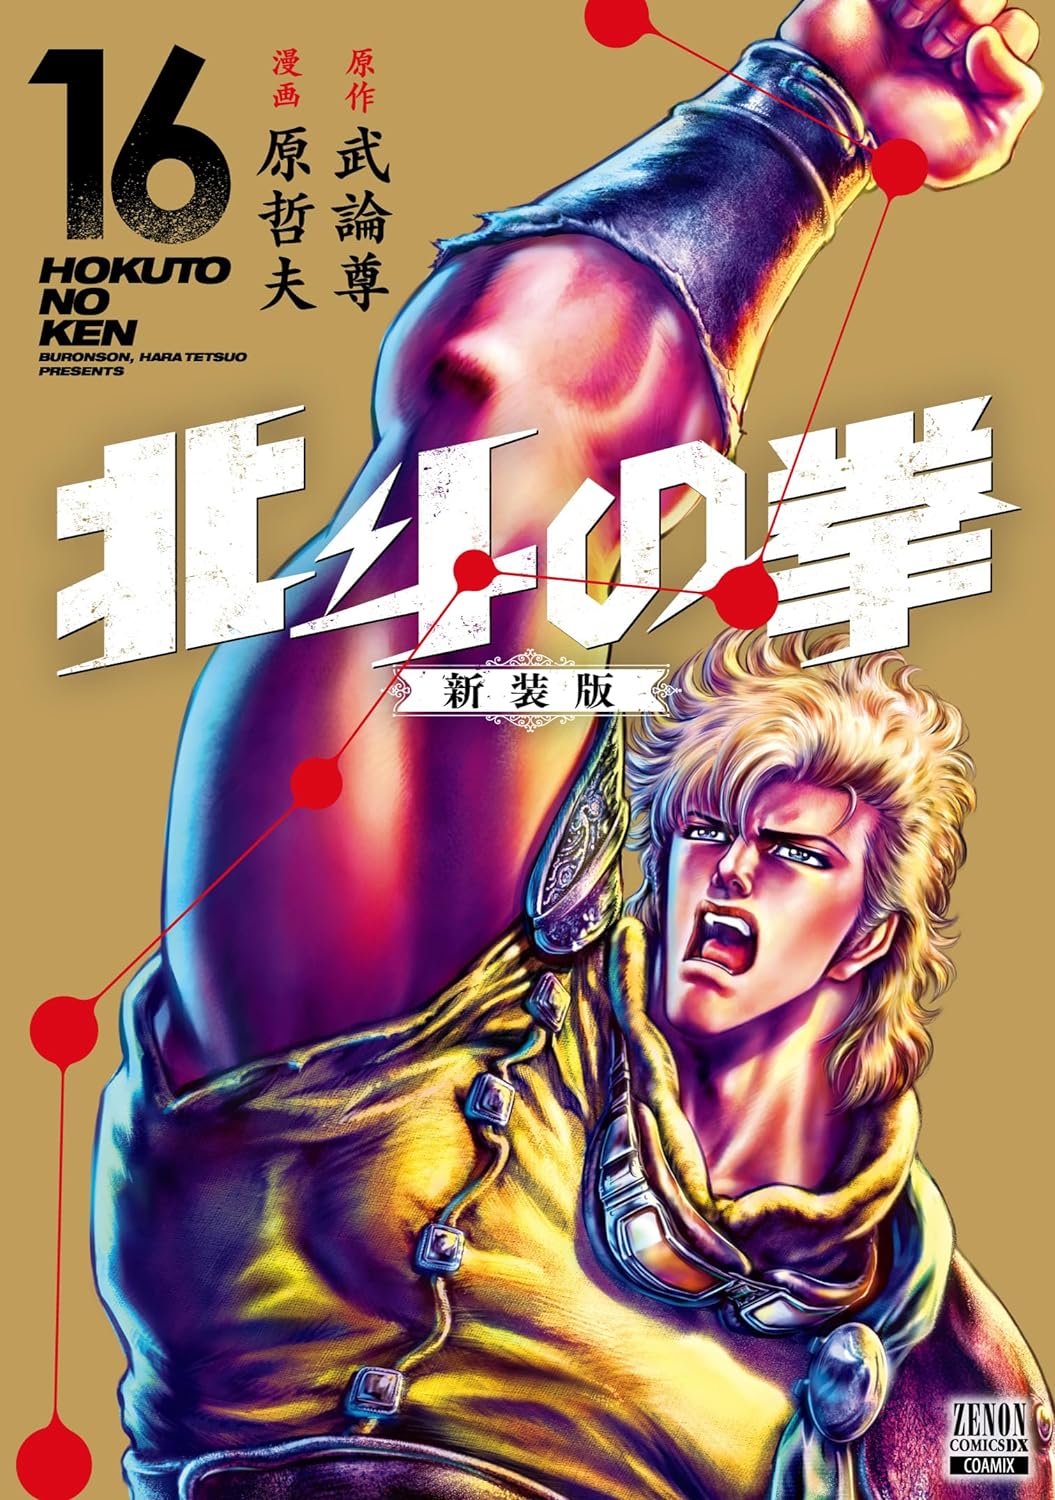 Hokuto no Ken (Fist of the North Star) #16  / Comic